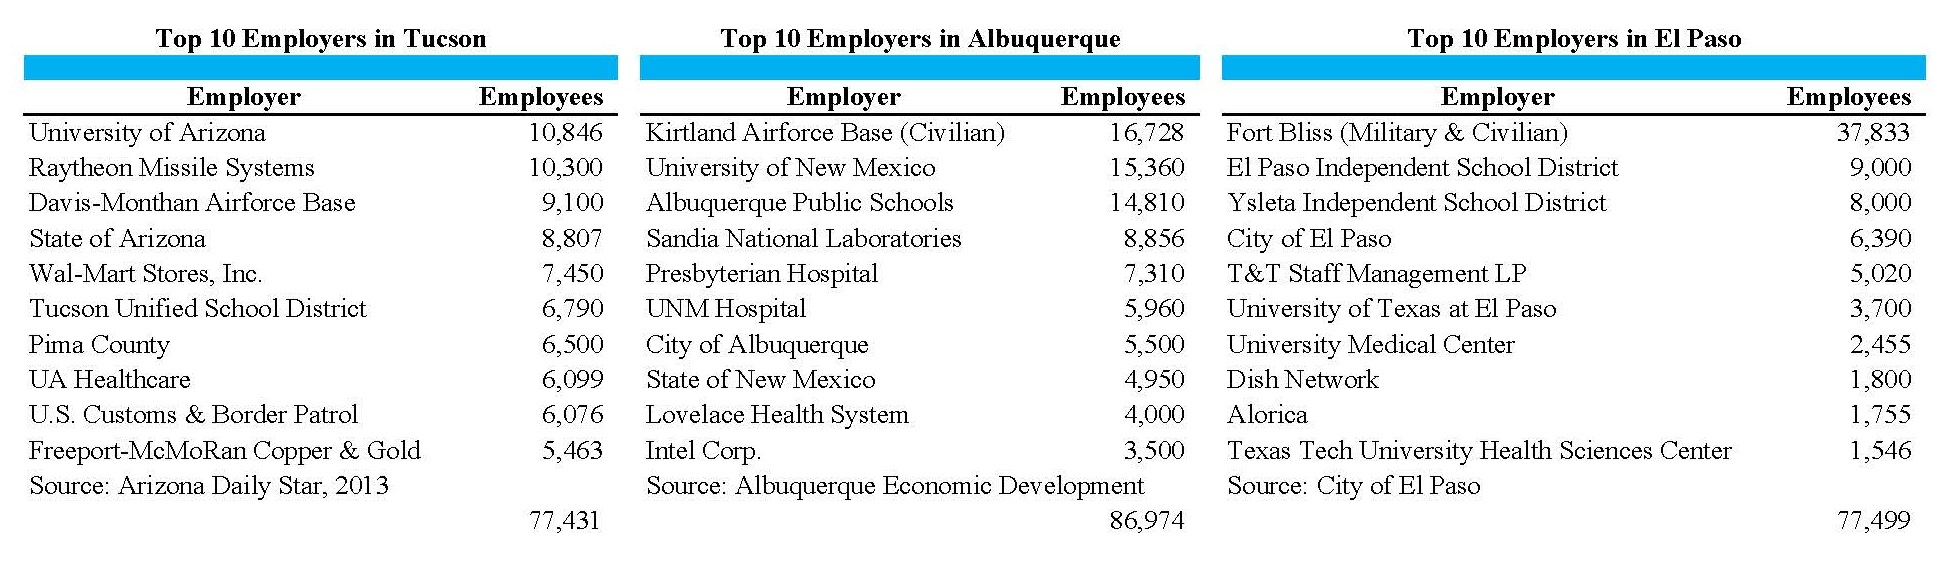 Tale Top Employers